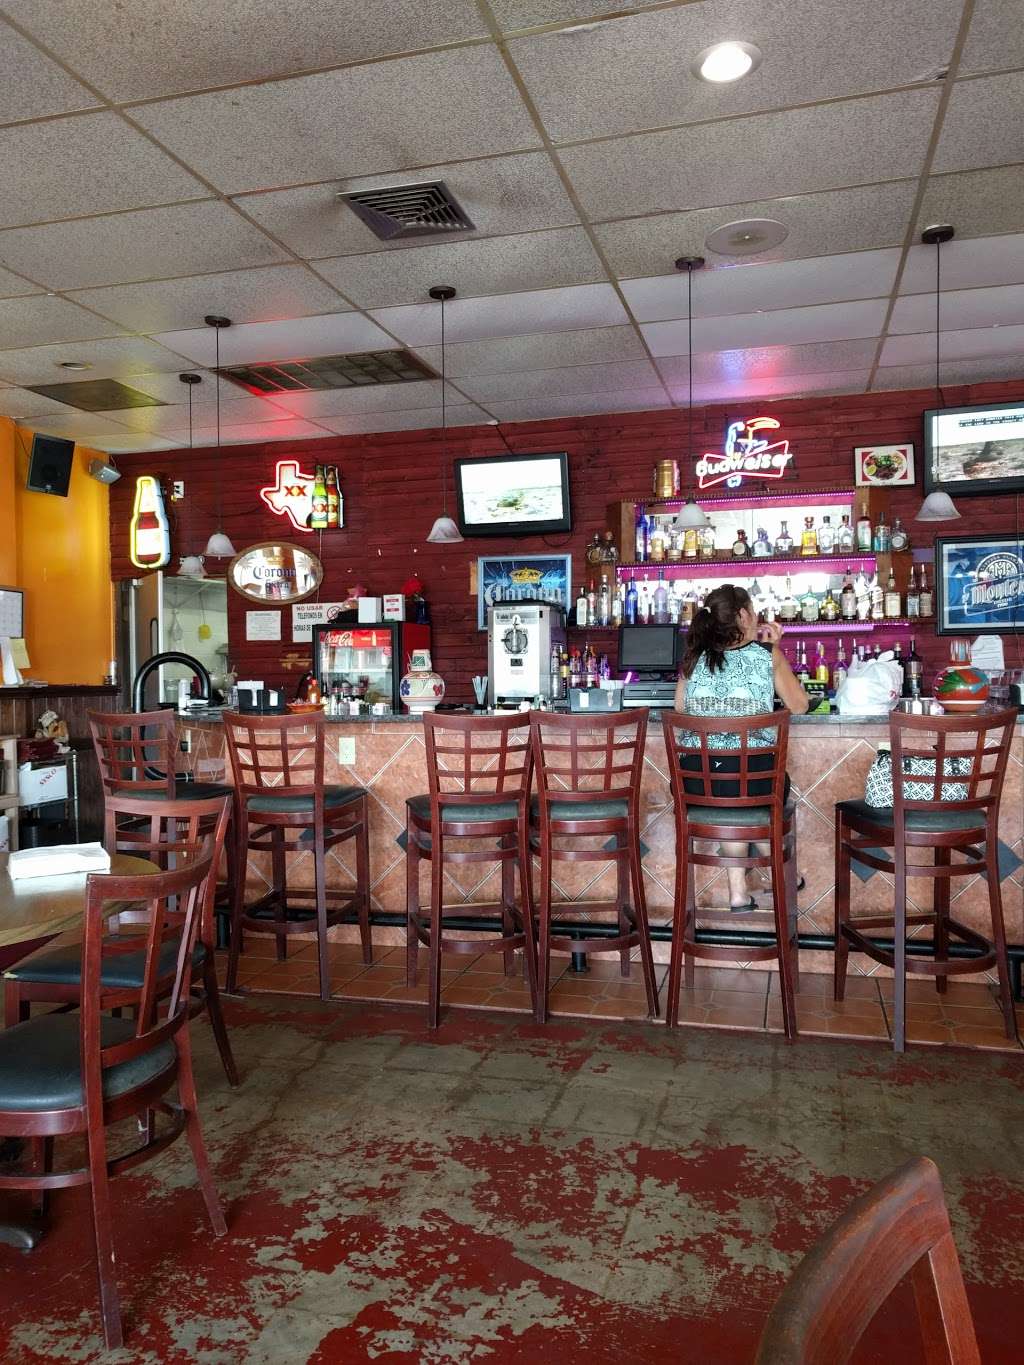 Dos Mas Mexican Restaurant | 2726 Spencer Hwy, Pasadena, TX 77504, USA | Phone: (281) 332-1801